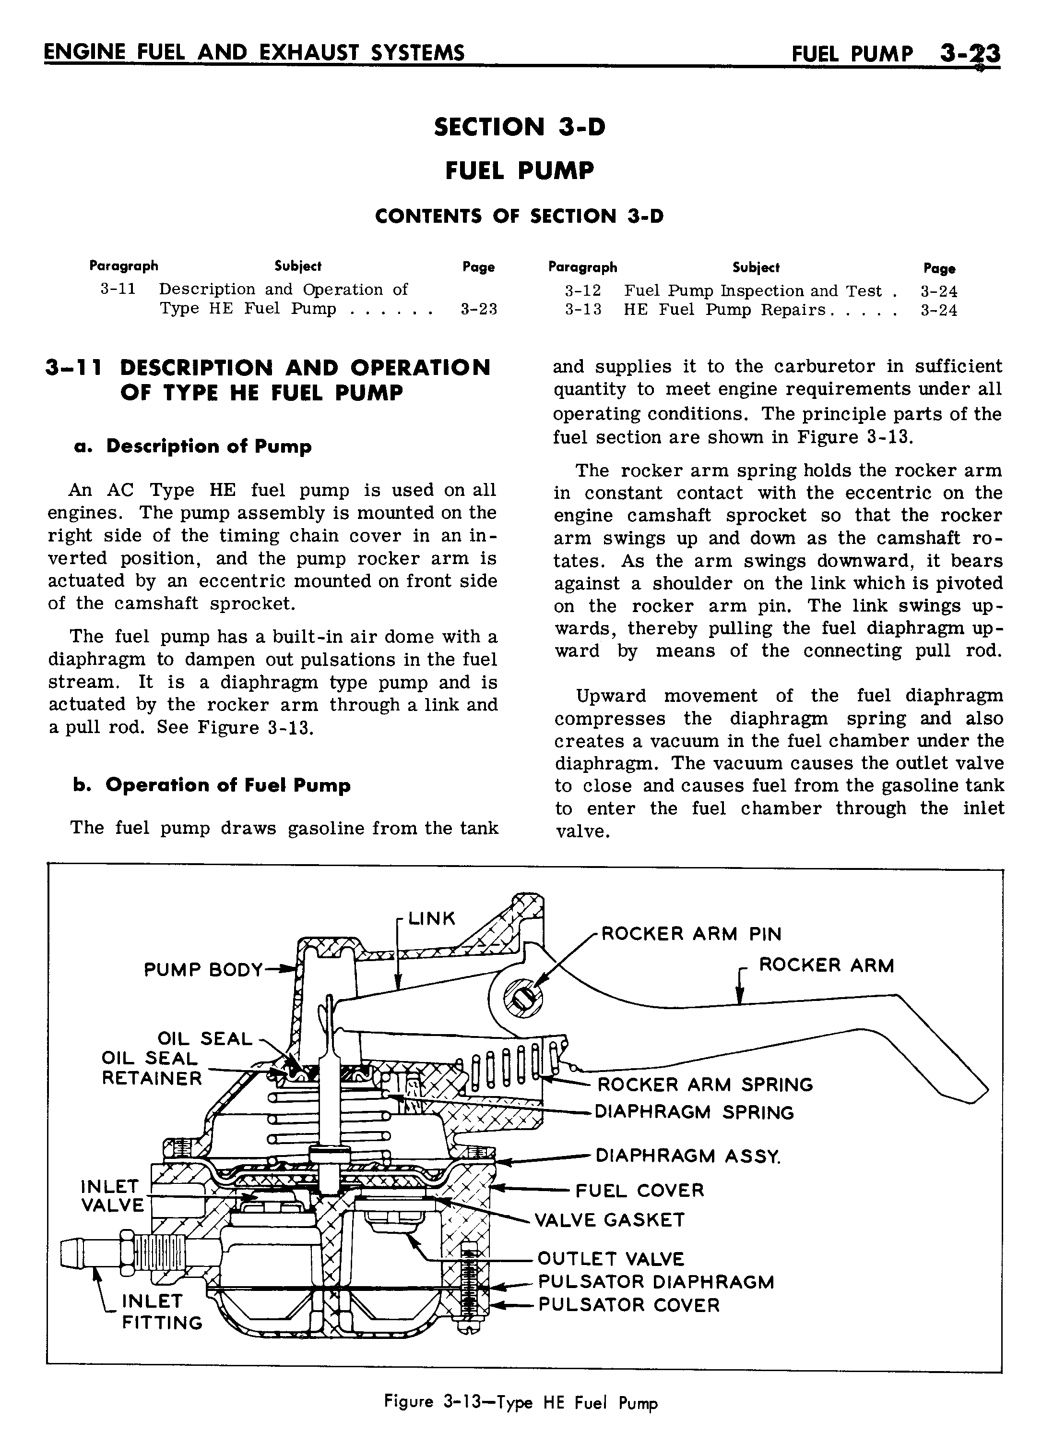 n_04 1961 Buick Shop Manual - Engine Fuel & Exhaust-023-023.jpg